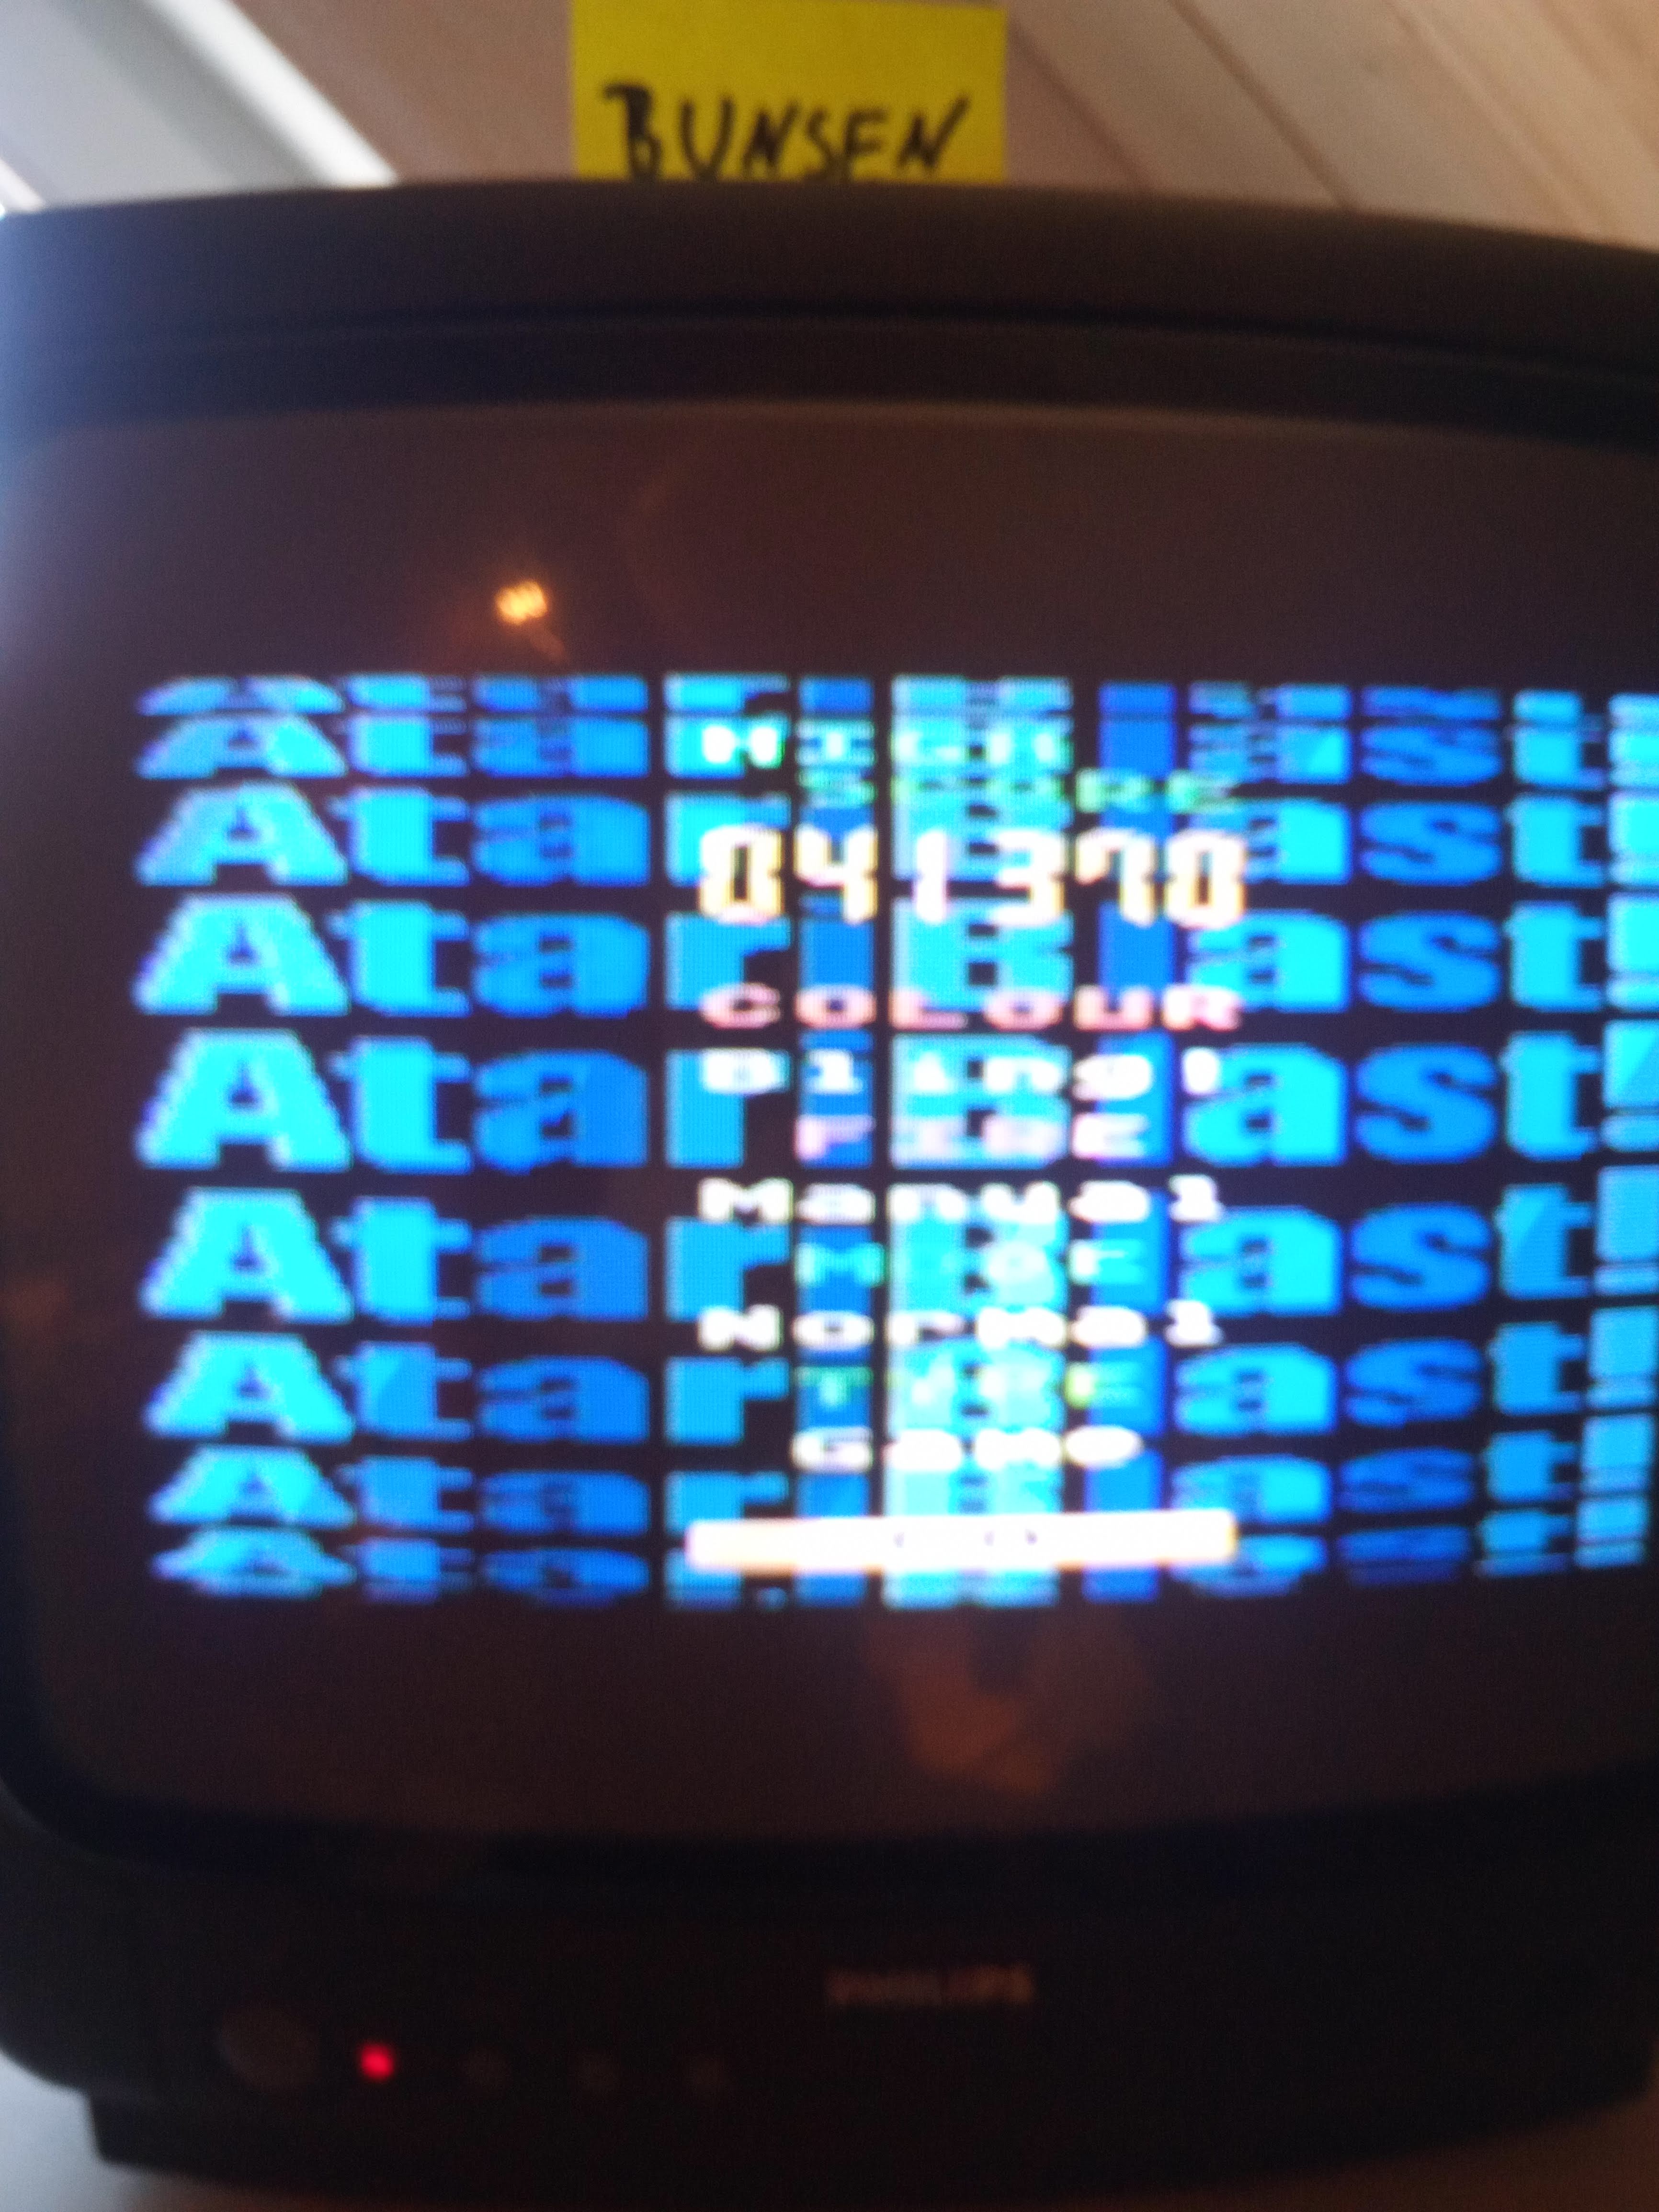 Atari Blast! [Normal] 41,370 points